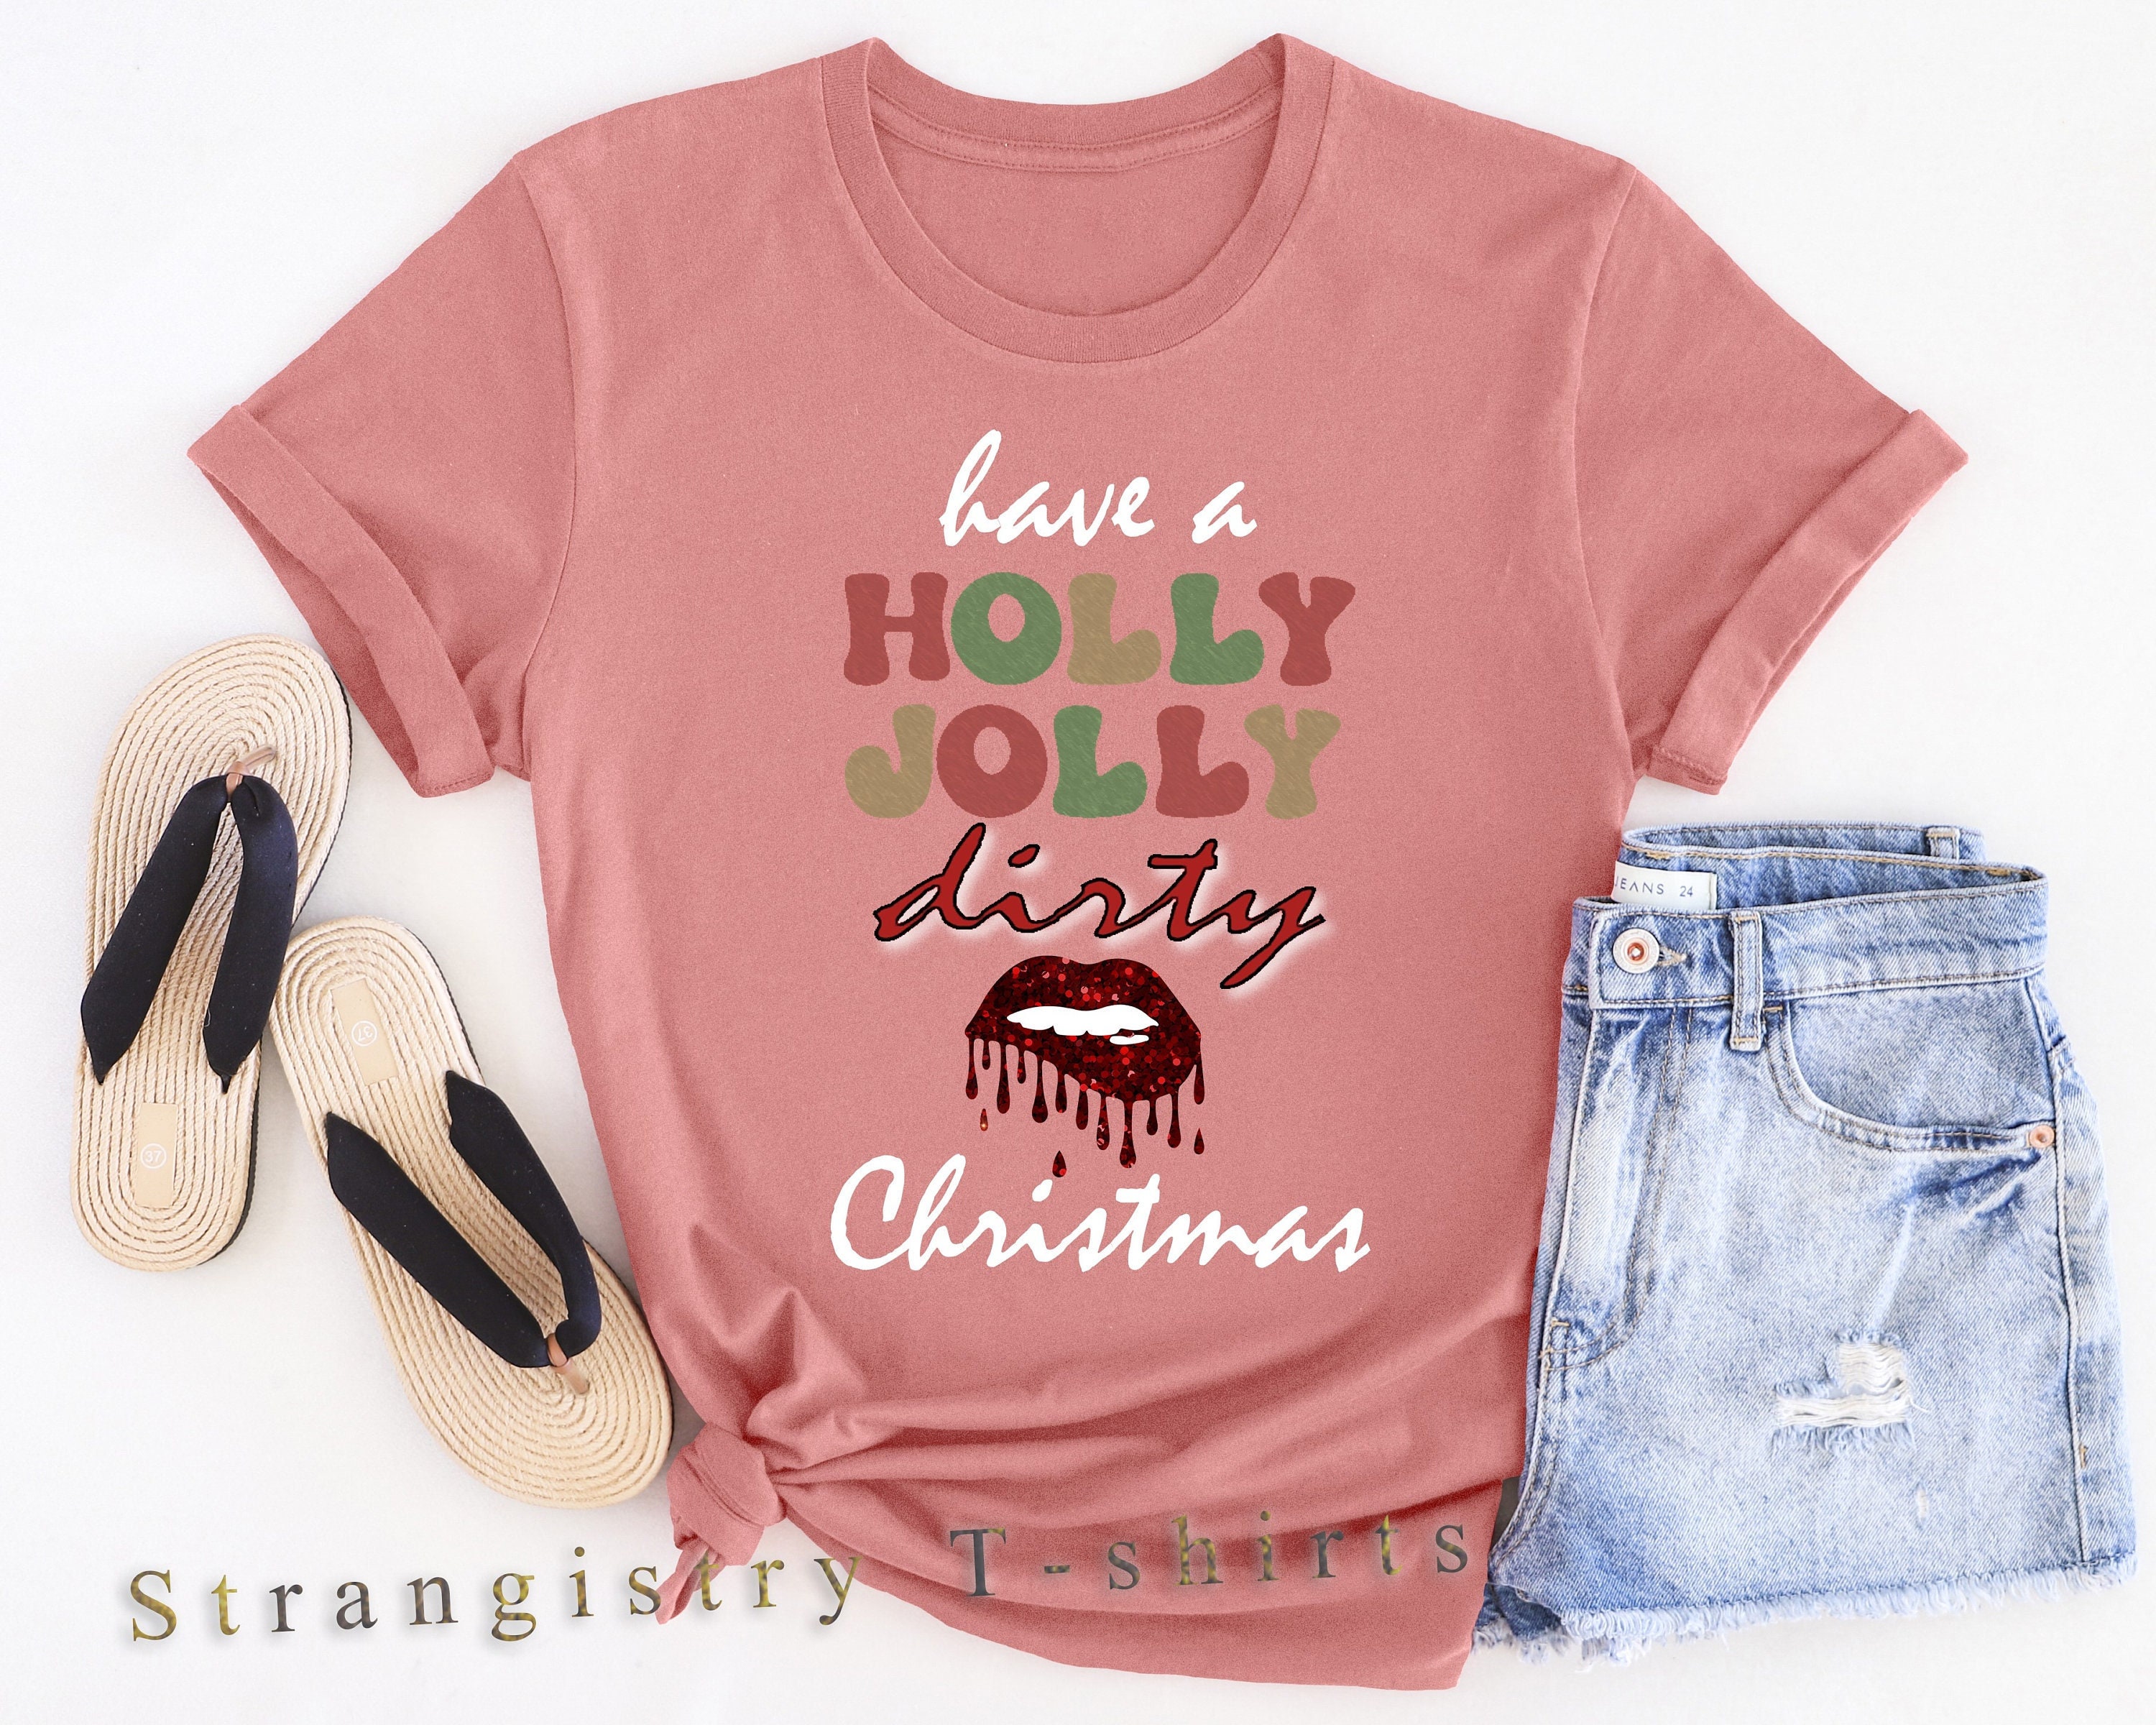 Sexy Dirty Graphic Christmas T-shirt, Naughty Offensive Christmas T-shirt, Have a Holly Jolly Dirty Christmas, Naughty Women Christmas Gift